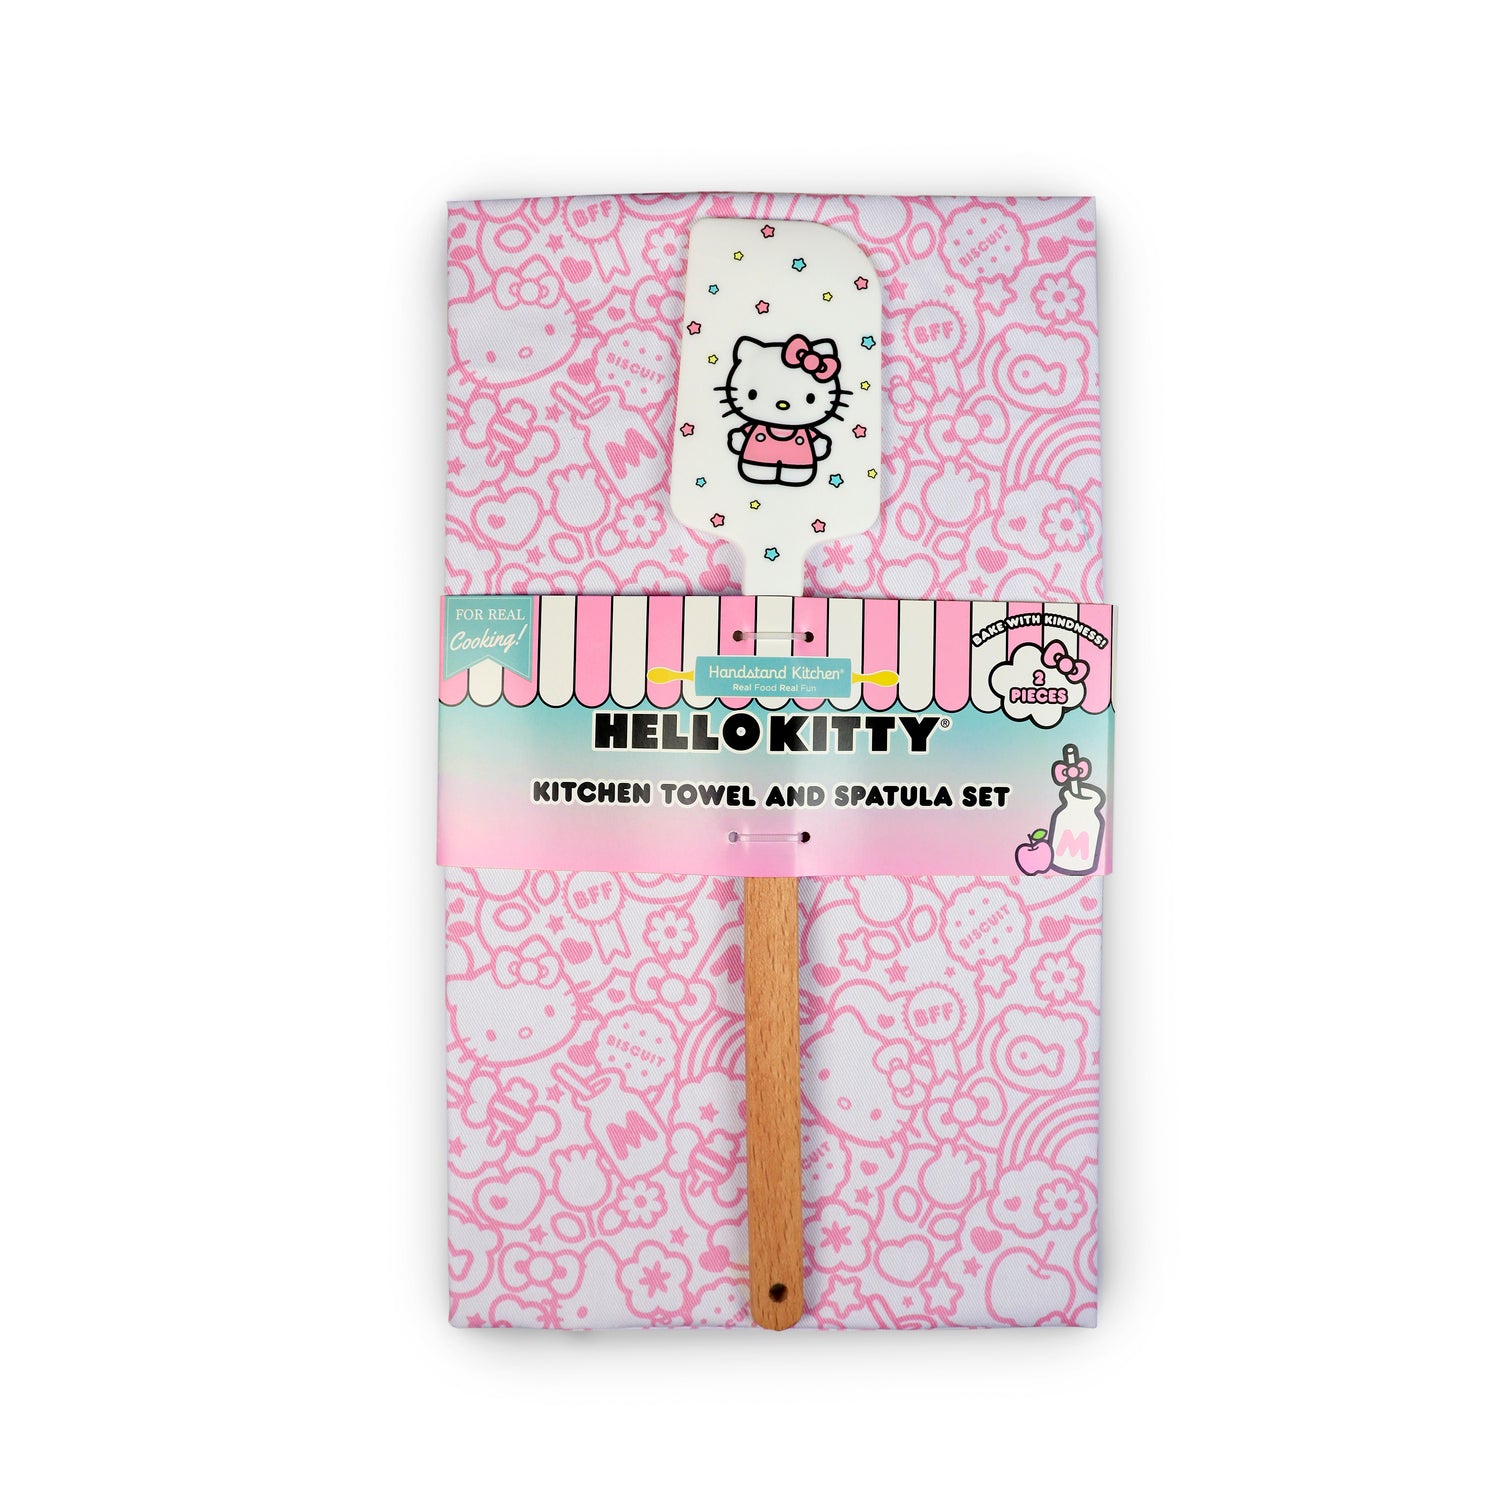 Hello Kitty Kitchen Towel and Spatula Set